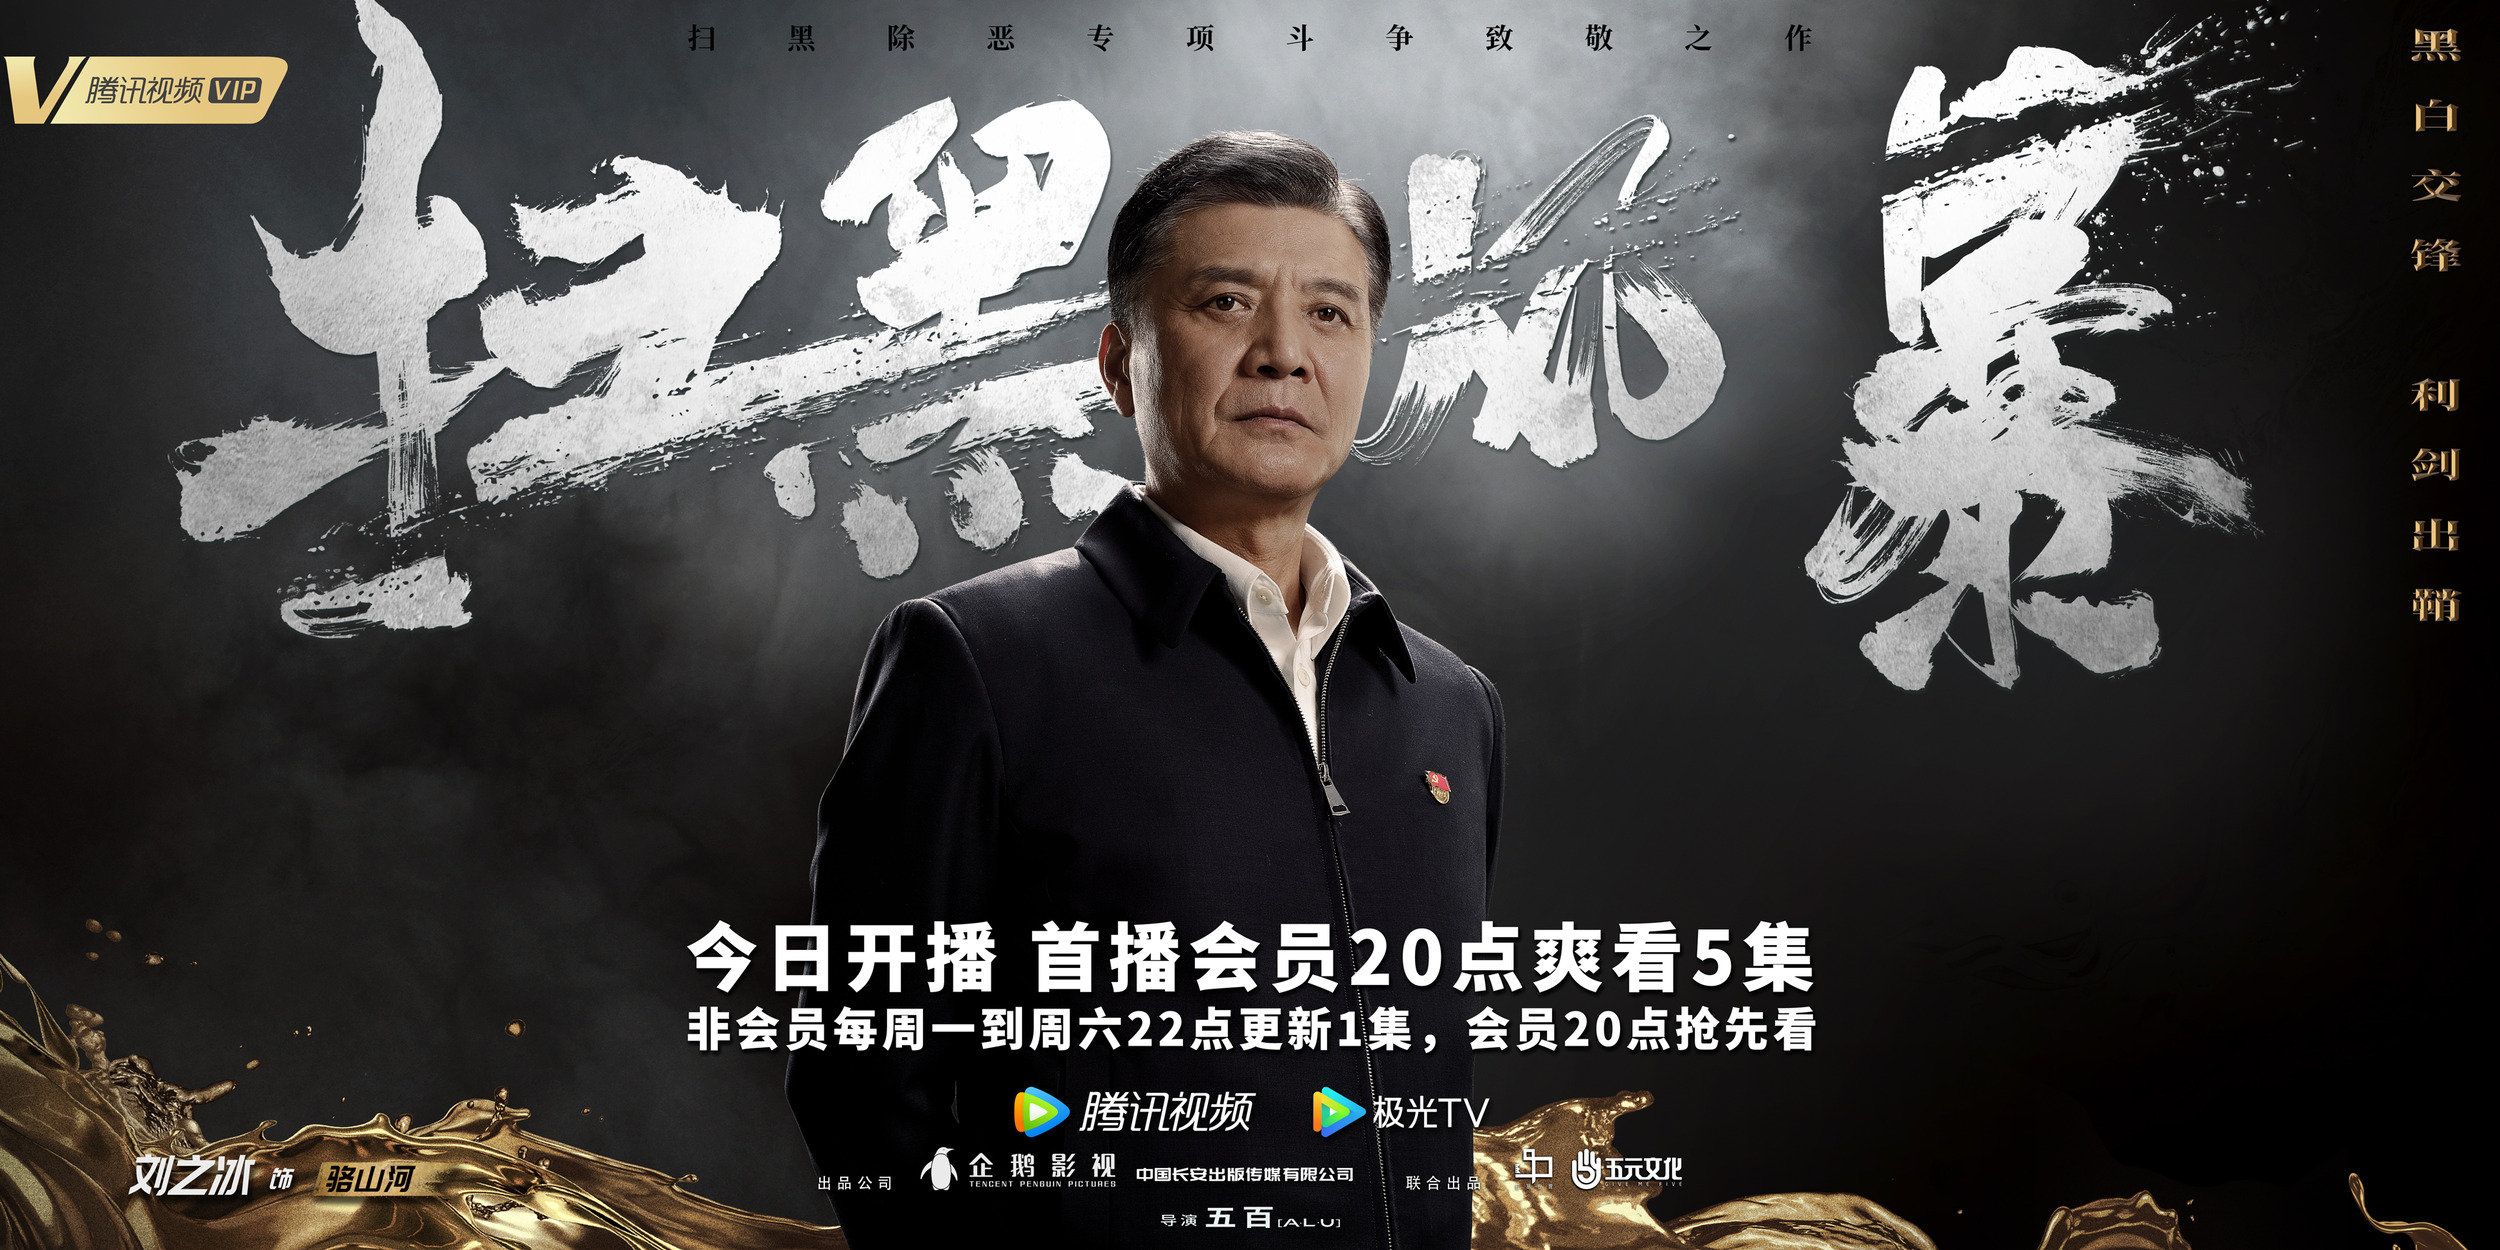 Mega Sized TV Poster Image for Sao hei feng bao (#6 of 9)